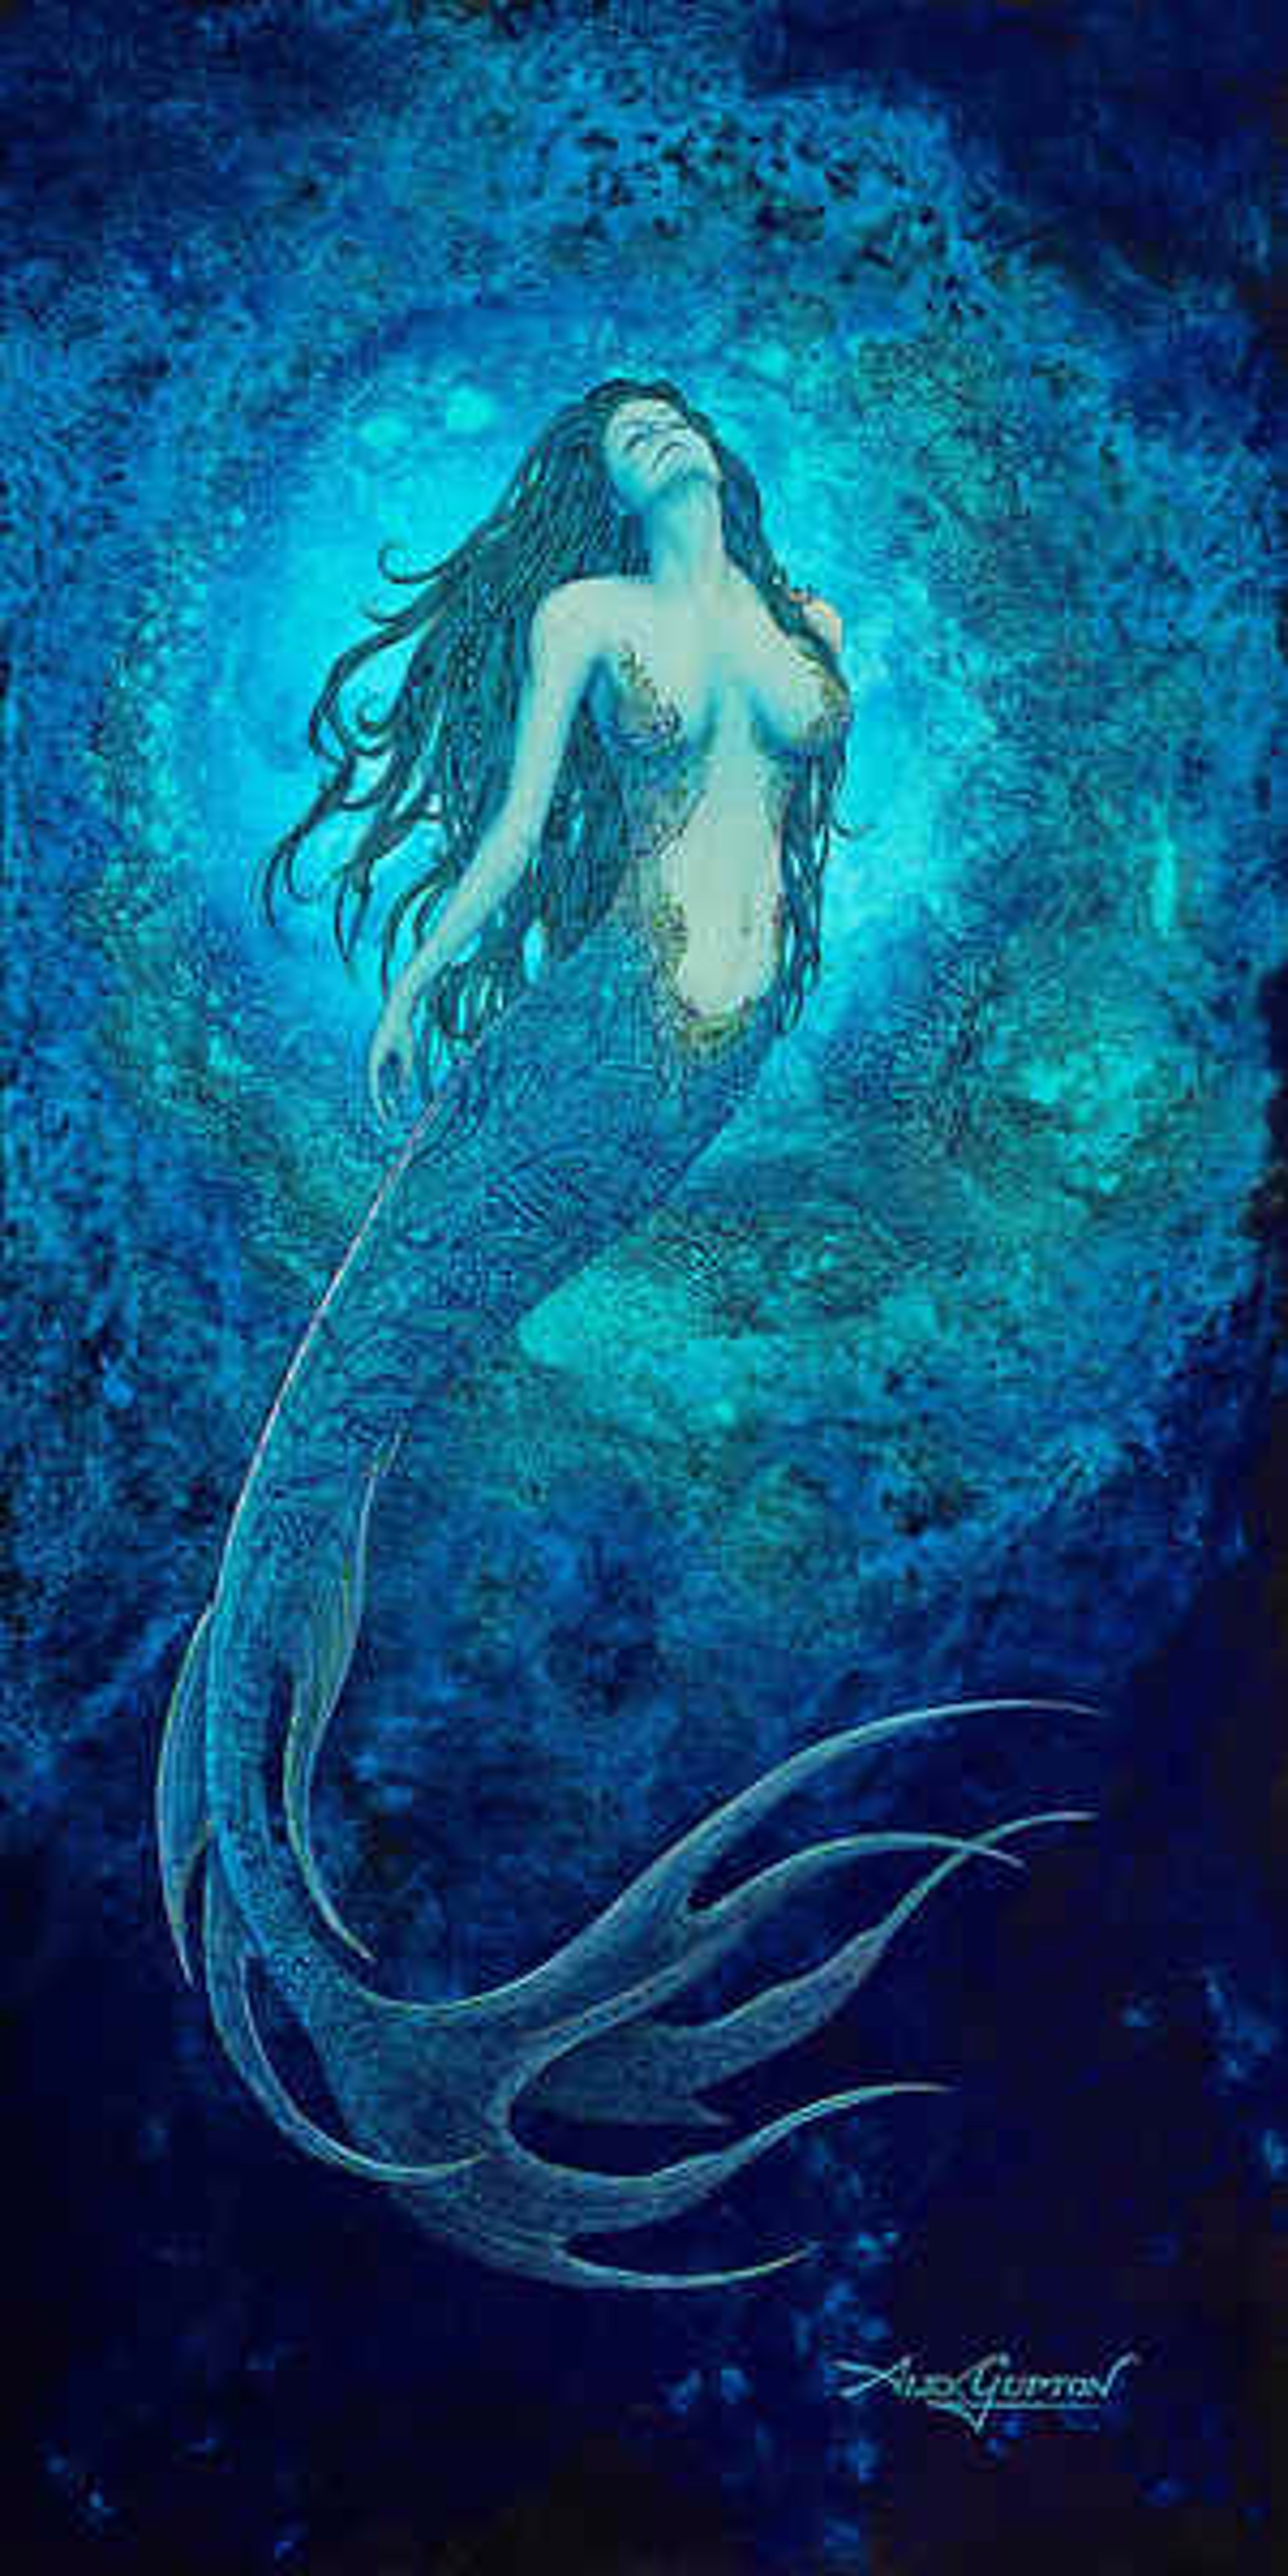 Goddess of the Deep by Alex Gupton